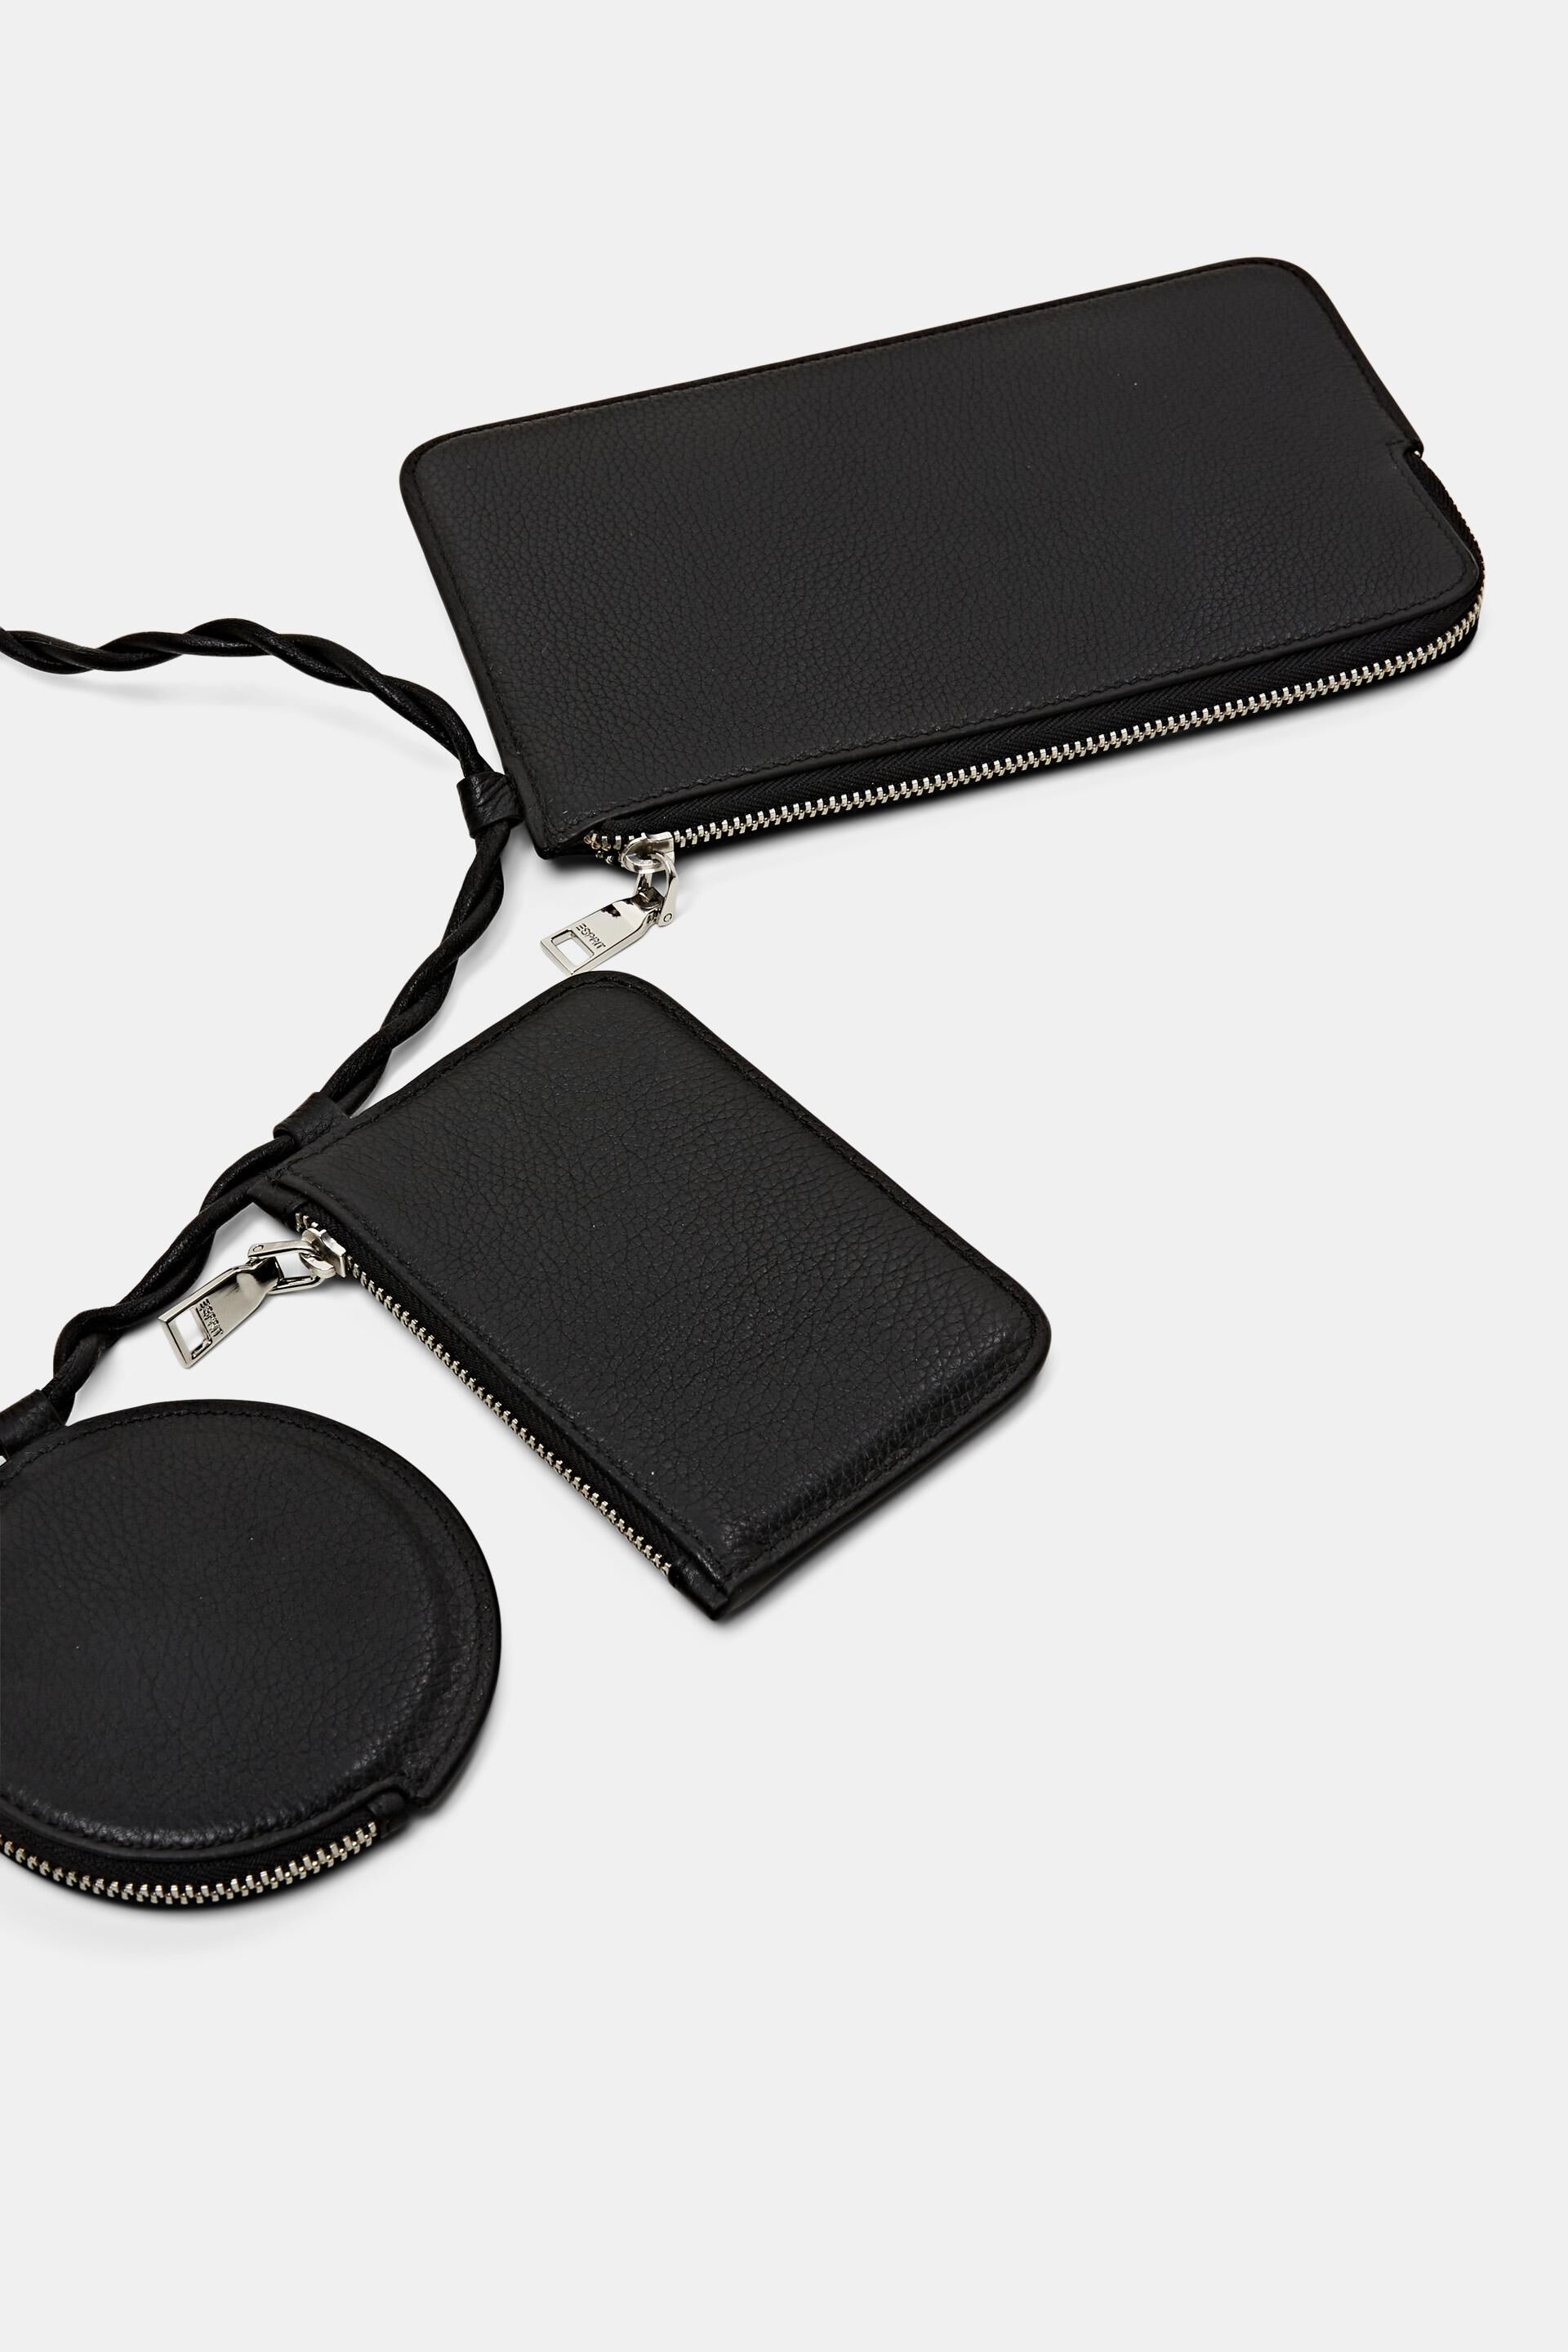 Buy Da Milano Genuine Leather Black Pouch Online